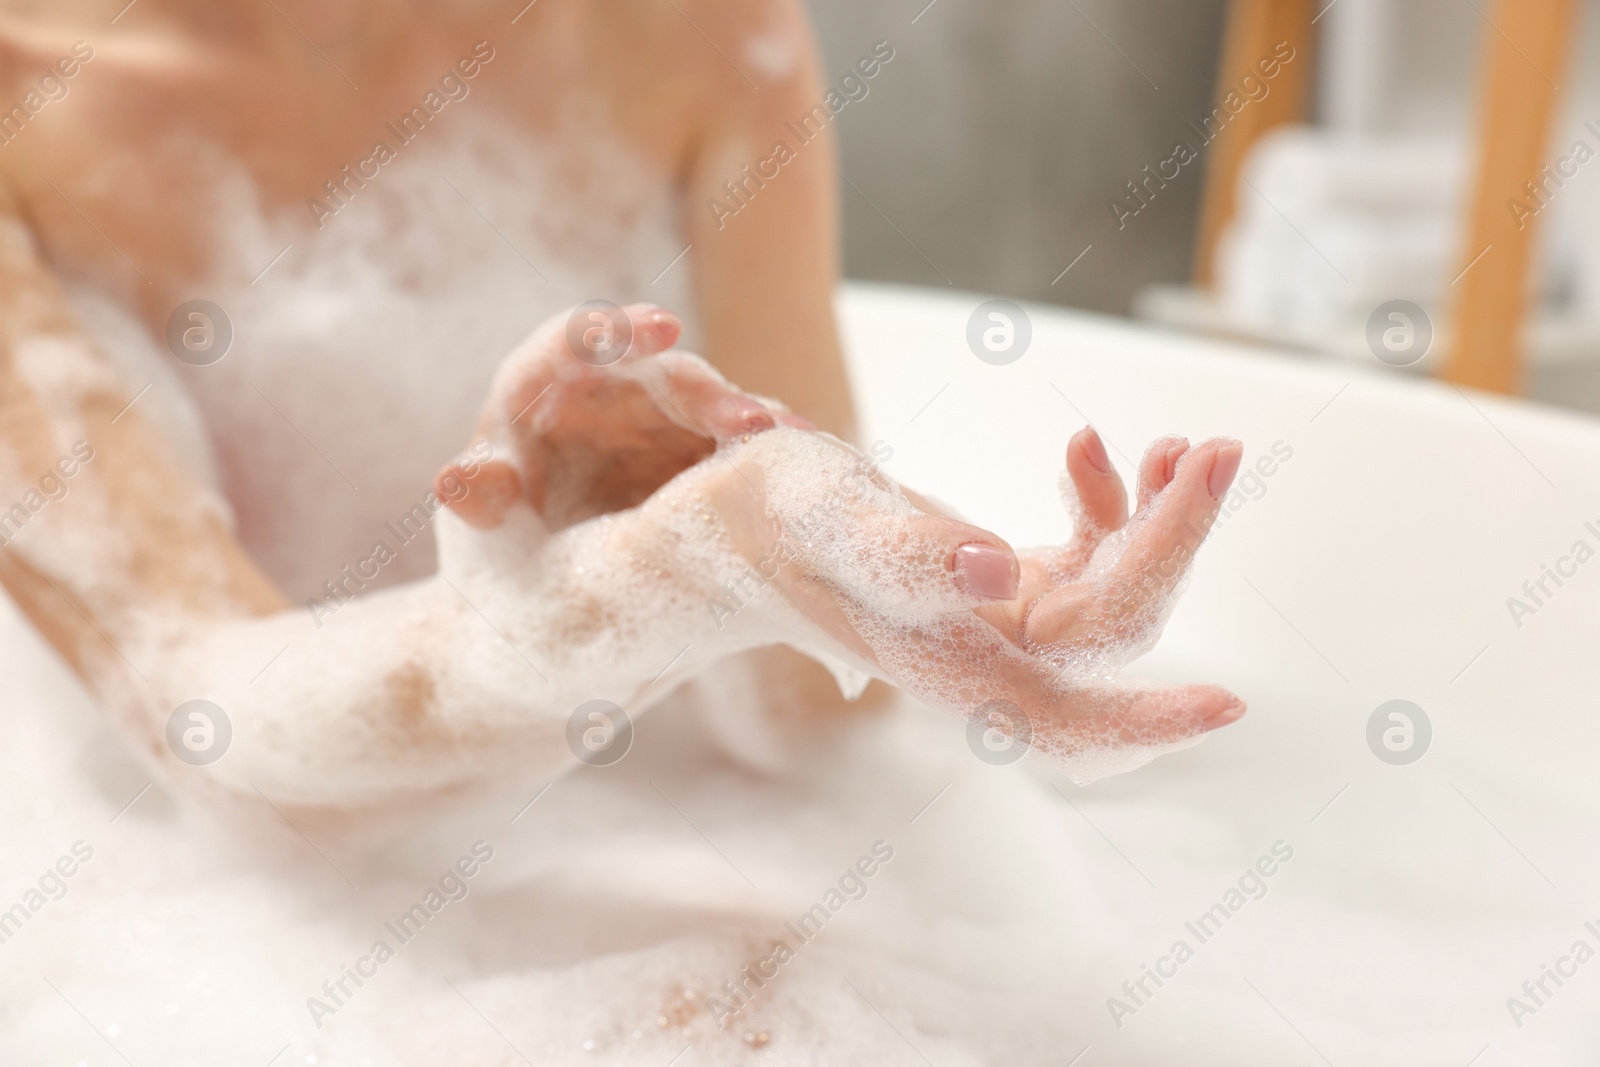 Photo of Woman taking bath with shower gel in bathroom, closeup